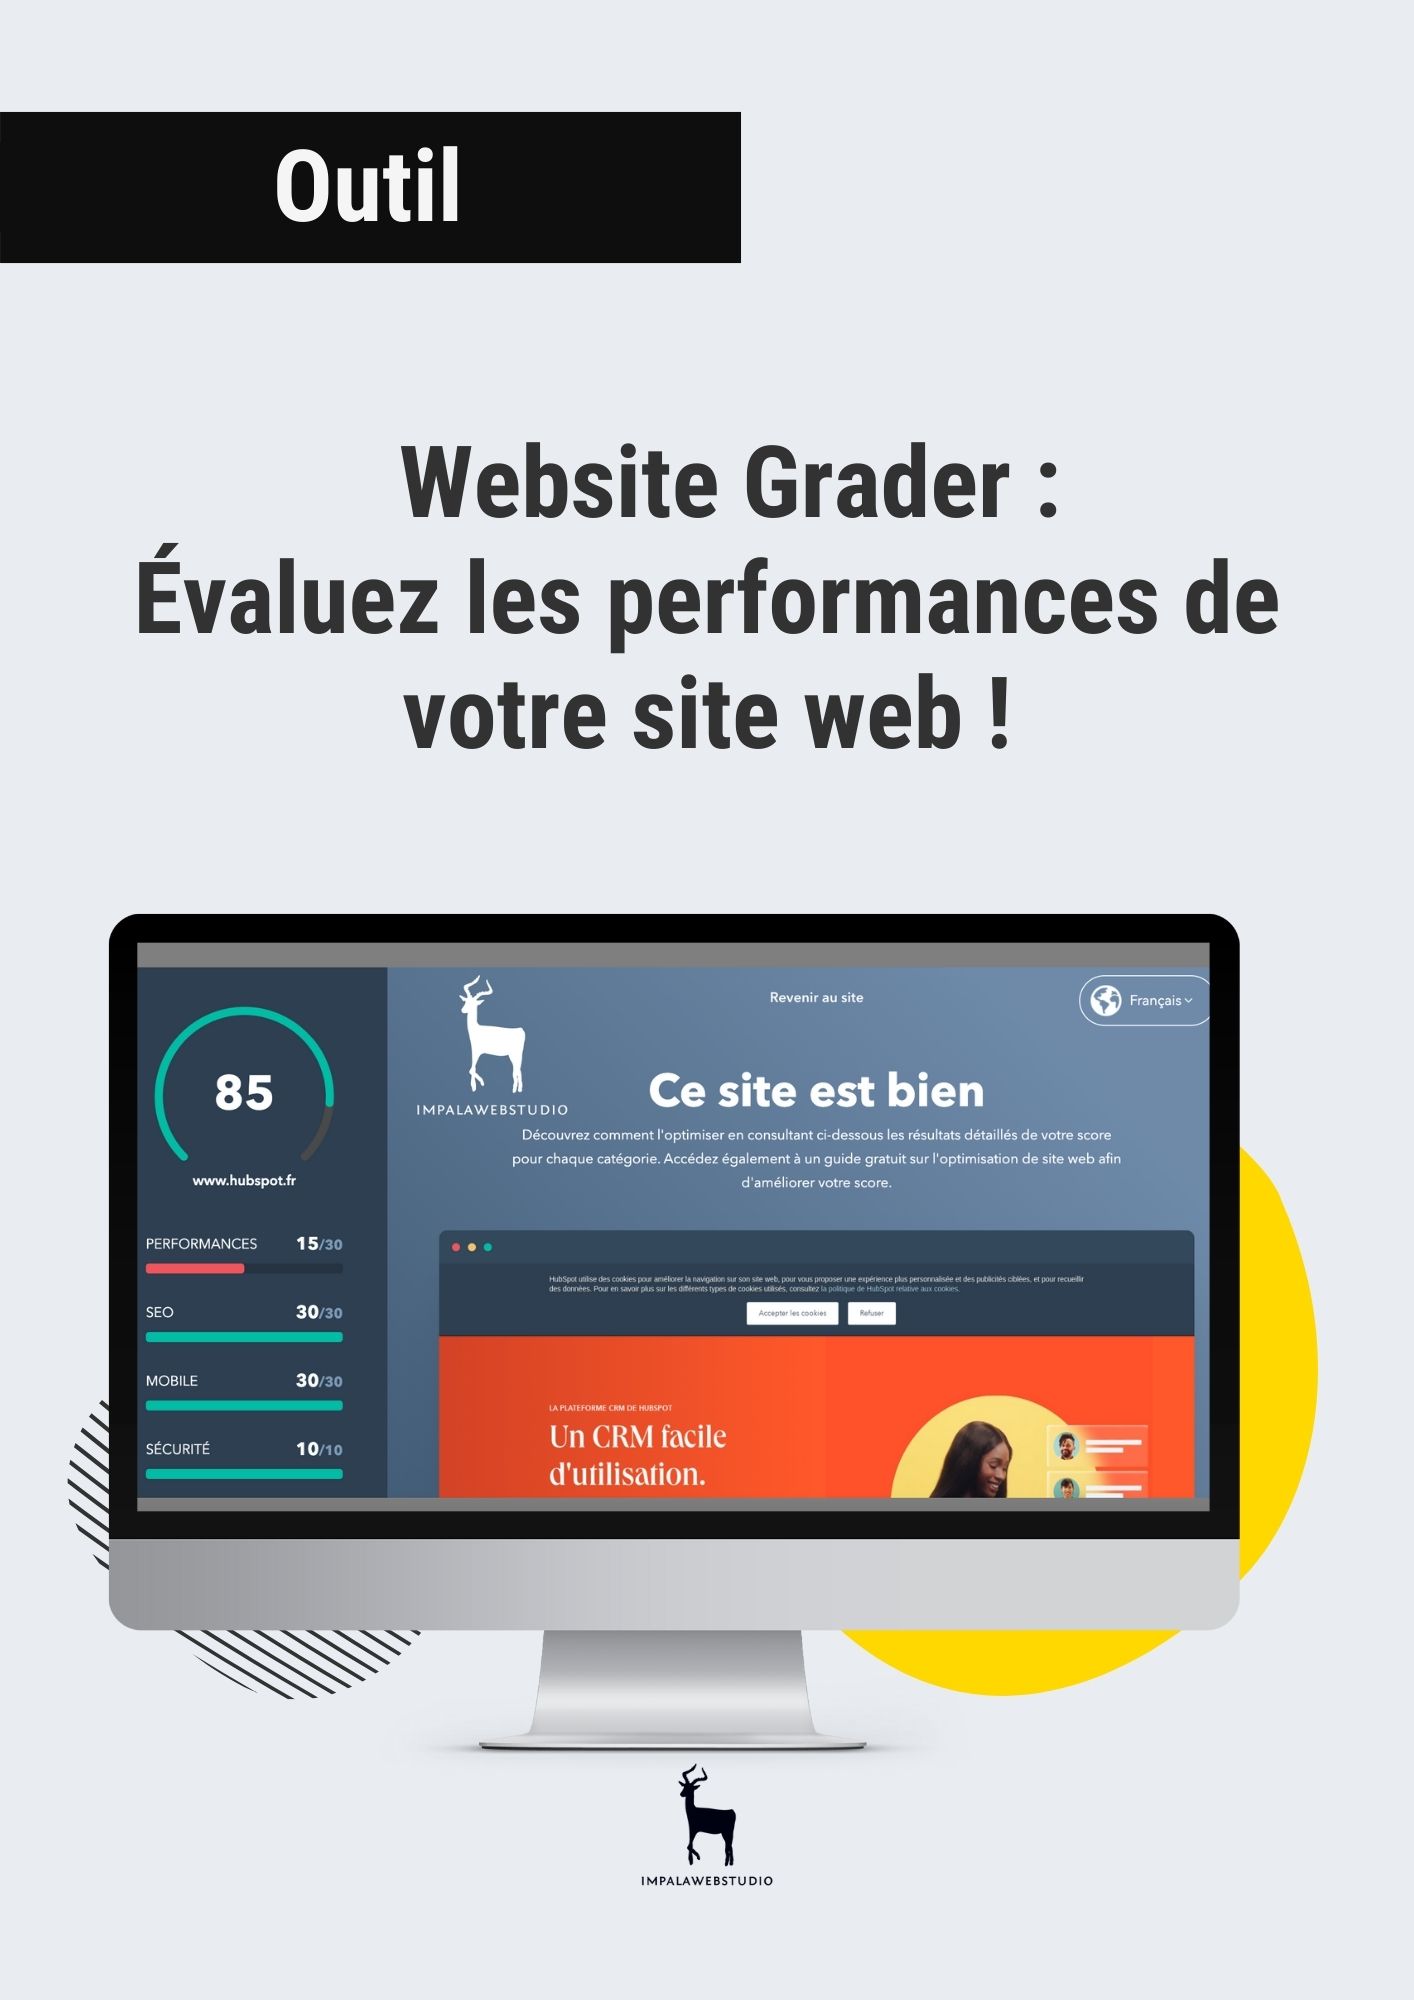 [Outil] Website Grader : Evaluez la performance de votre site web - {id=8, name='outil', order=7} 